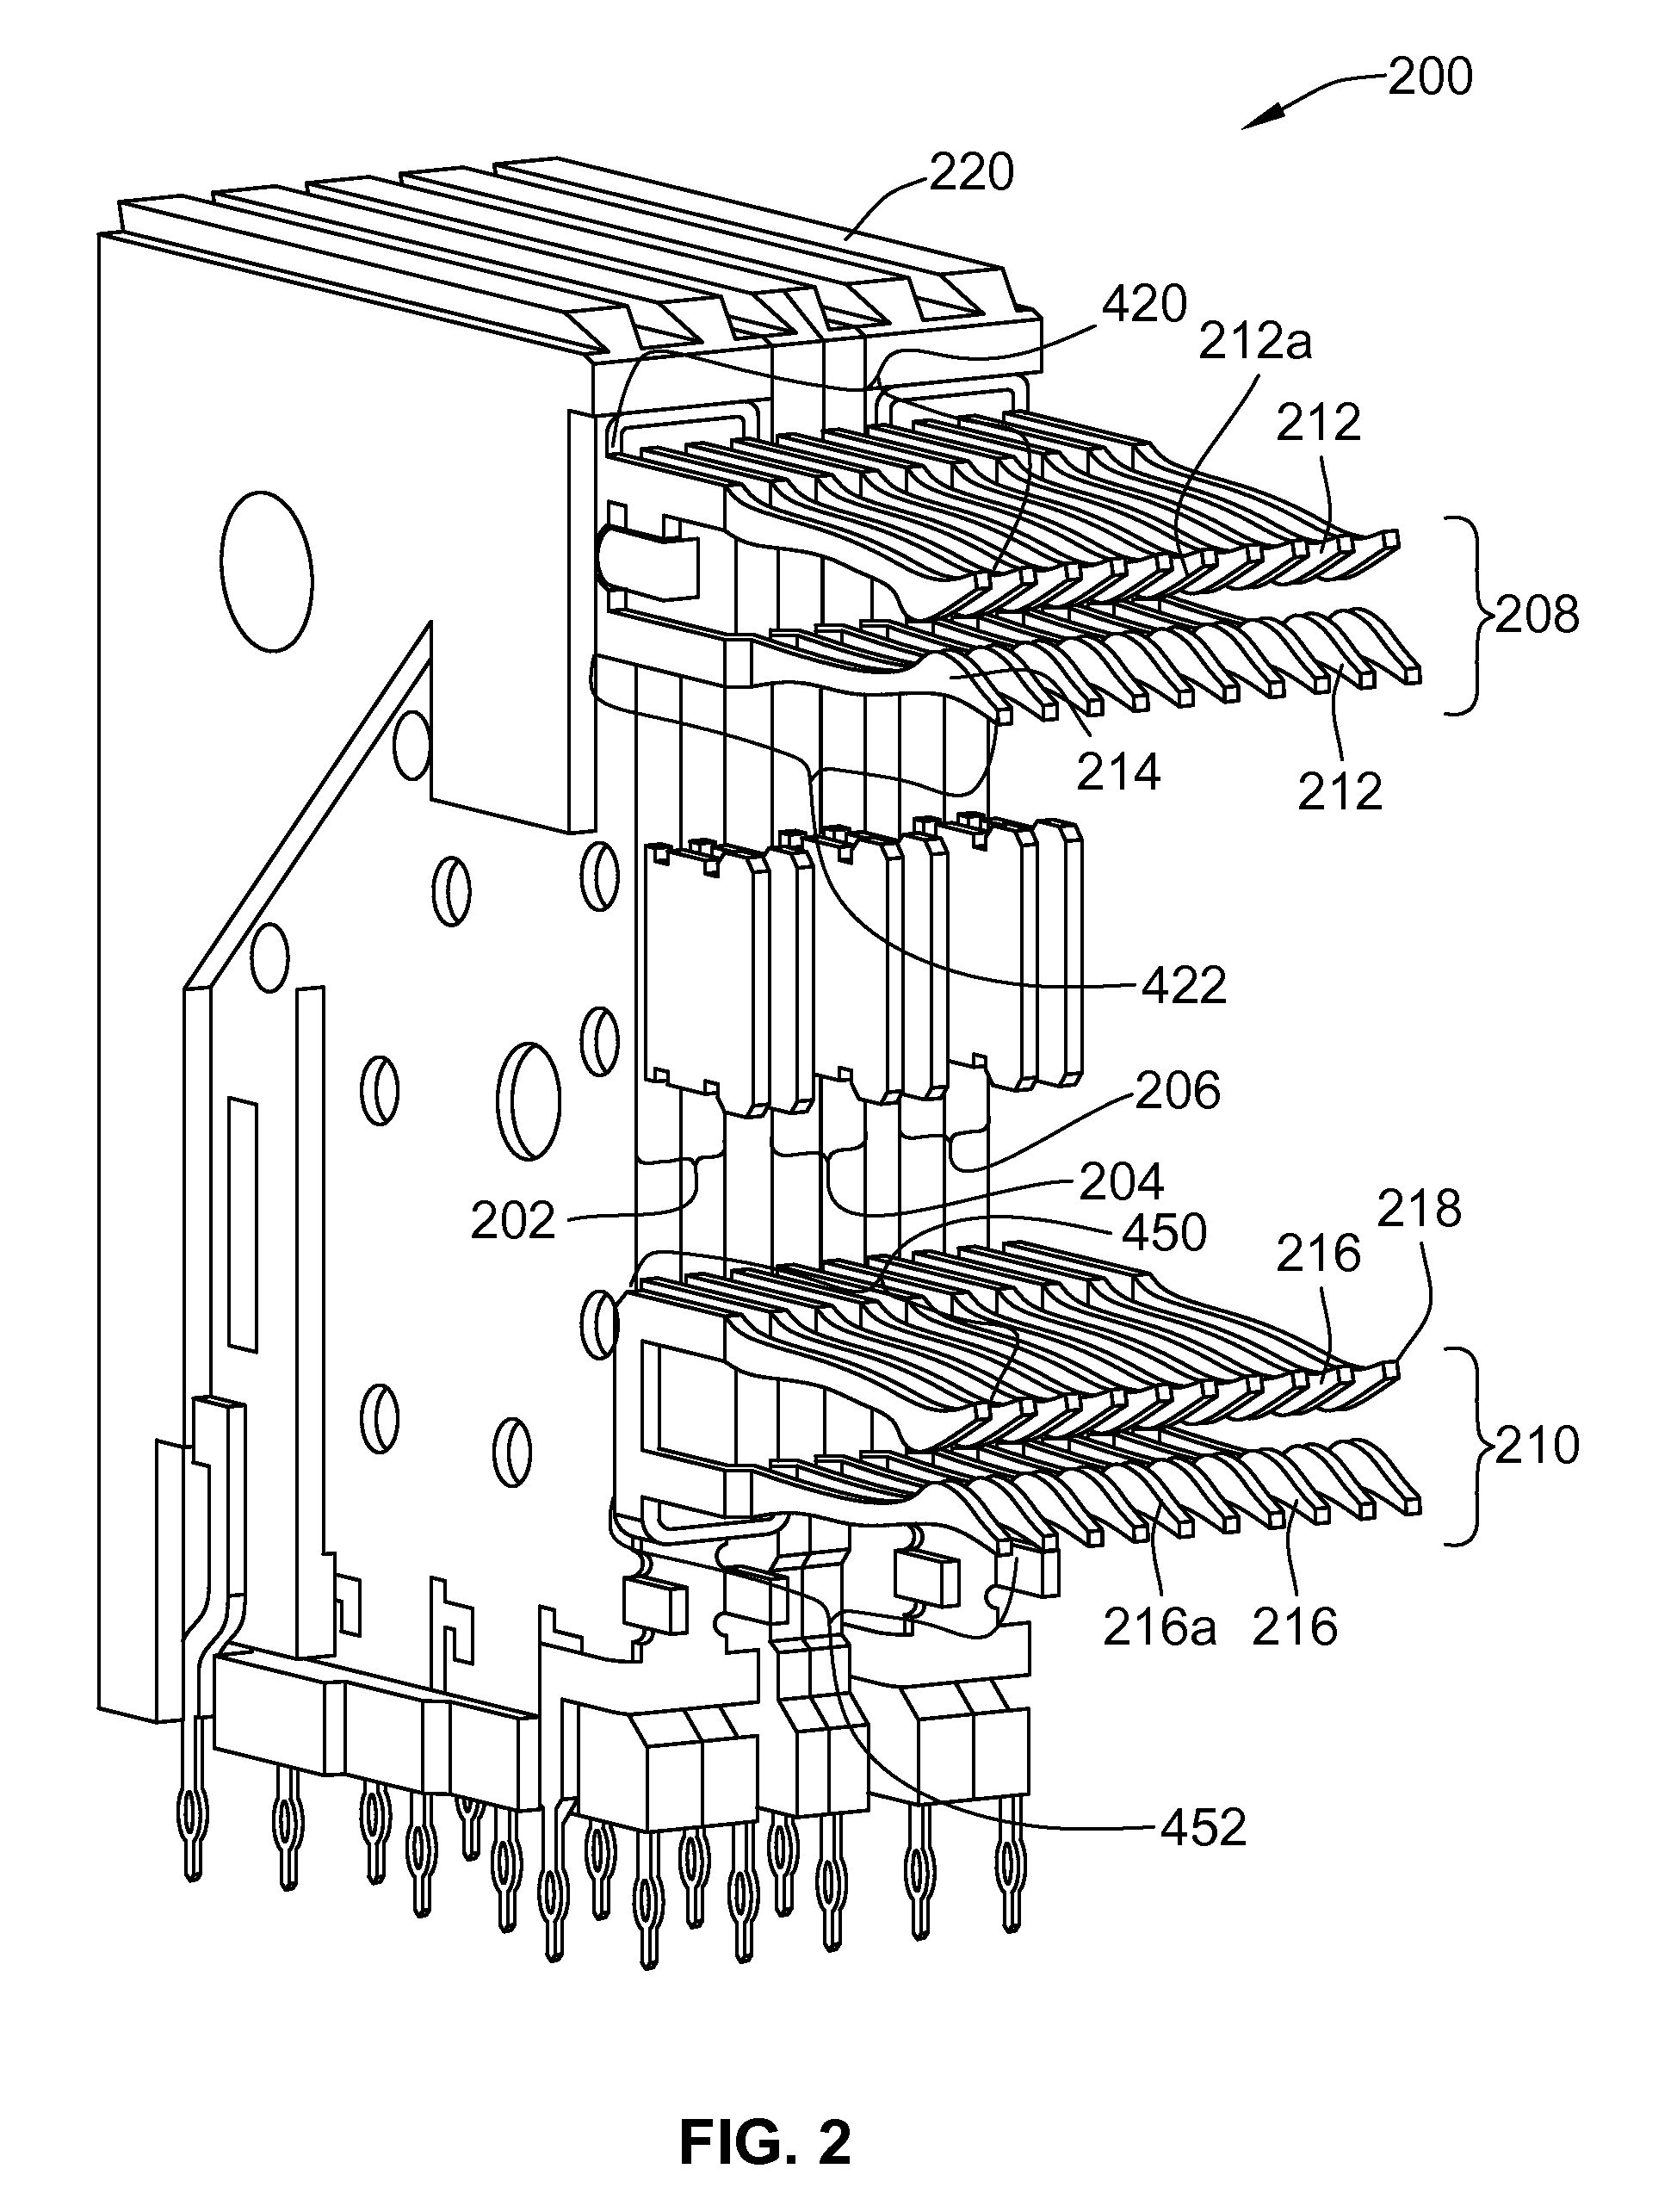 Modular connector system